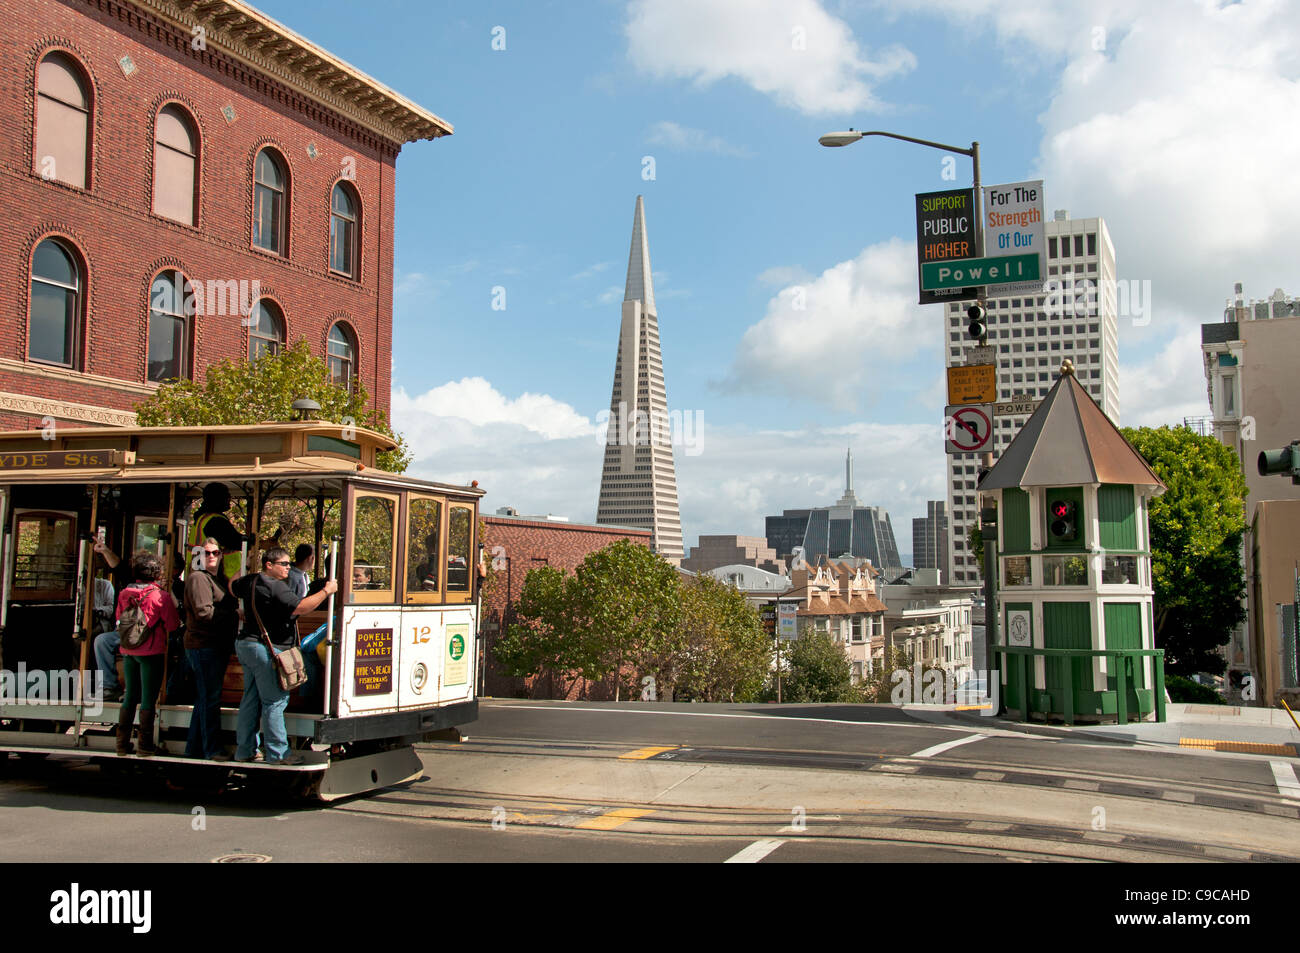 Down Town San Vereinigte Francisco California Staaten von Amerika Amerikaner / USA Stadt Stockfoto